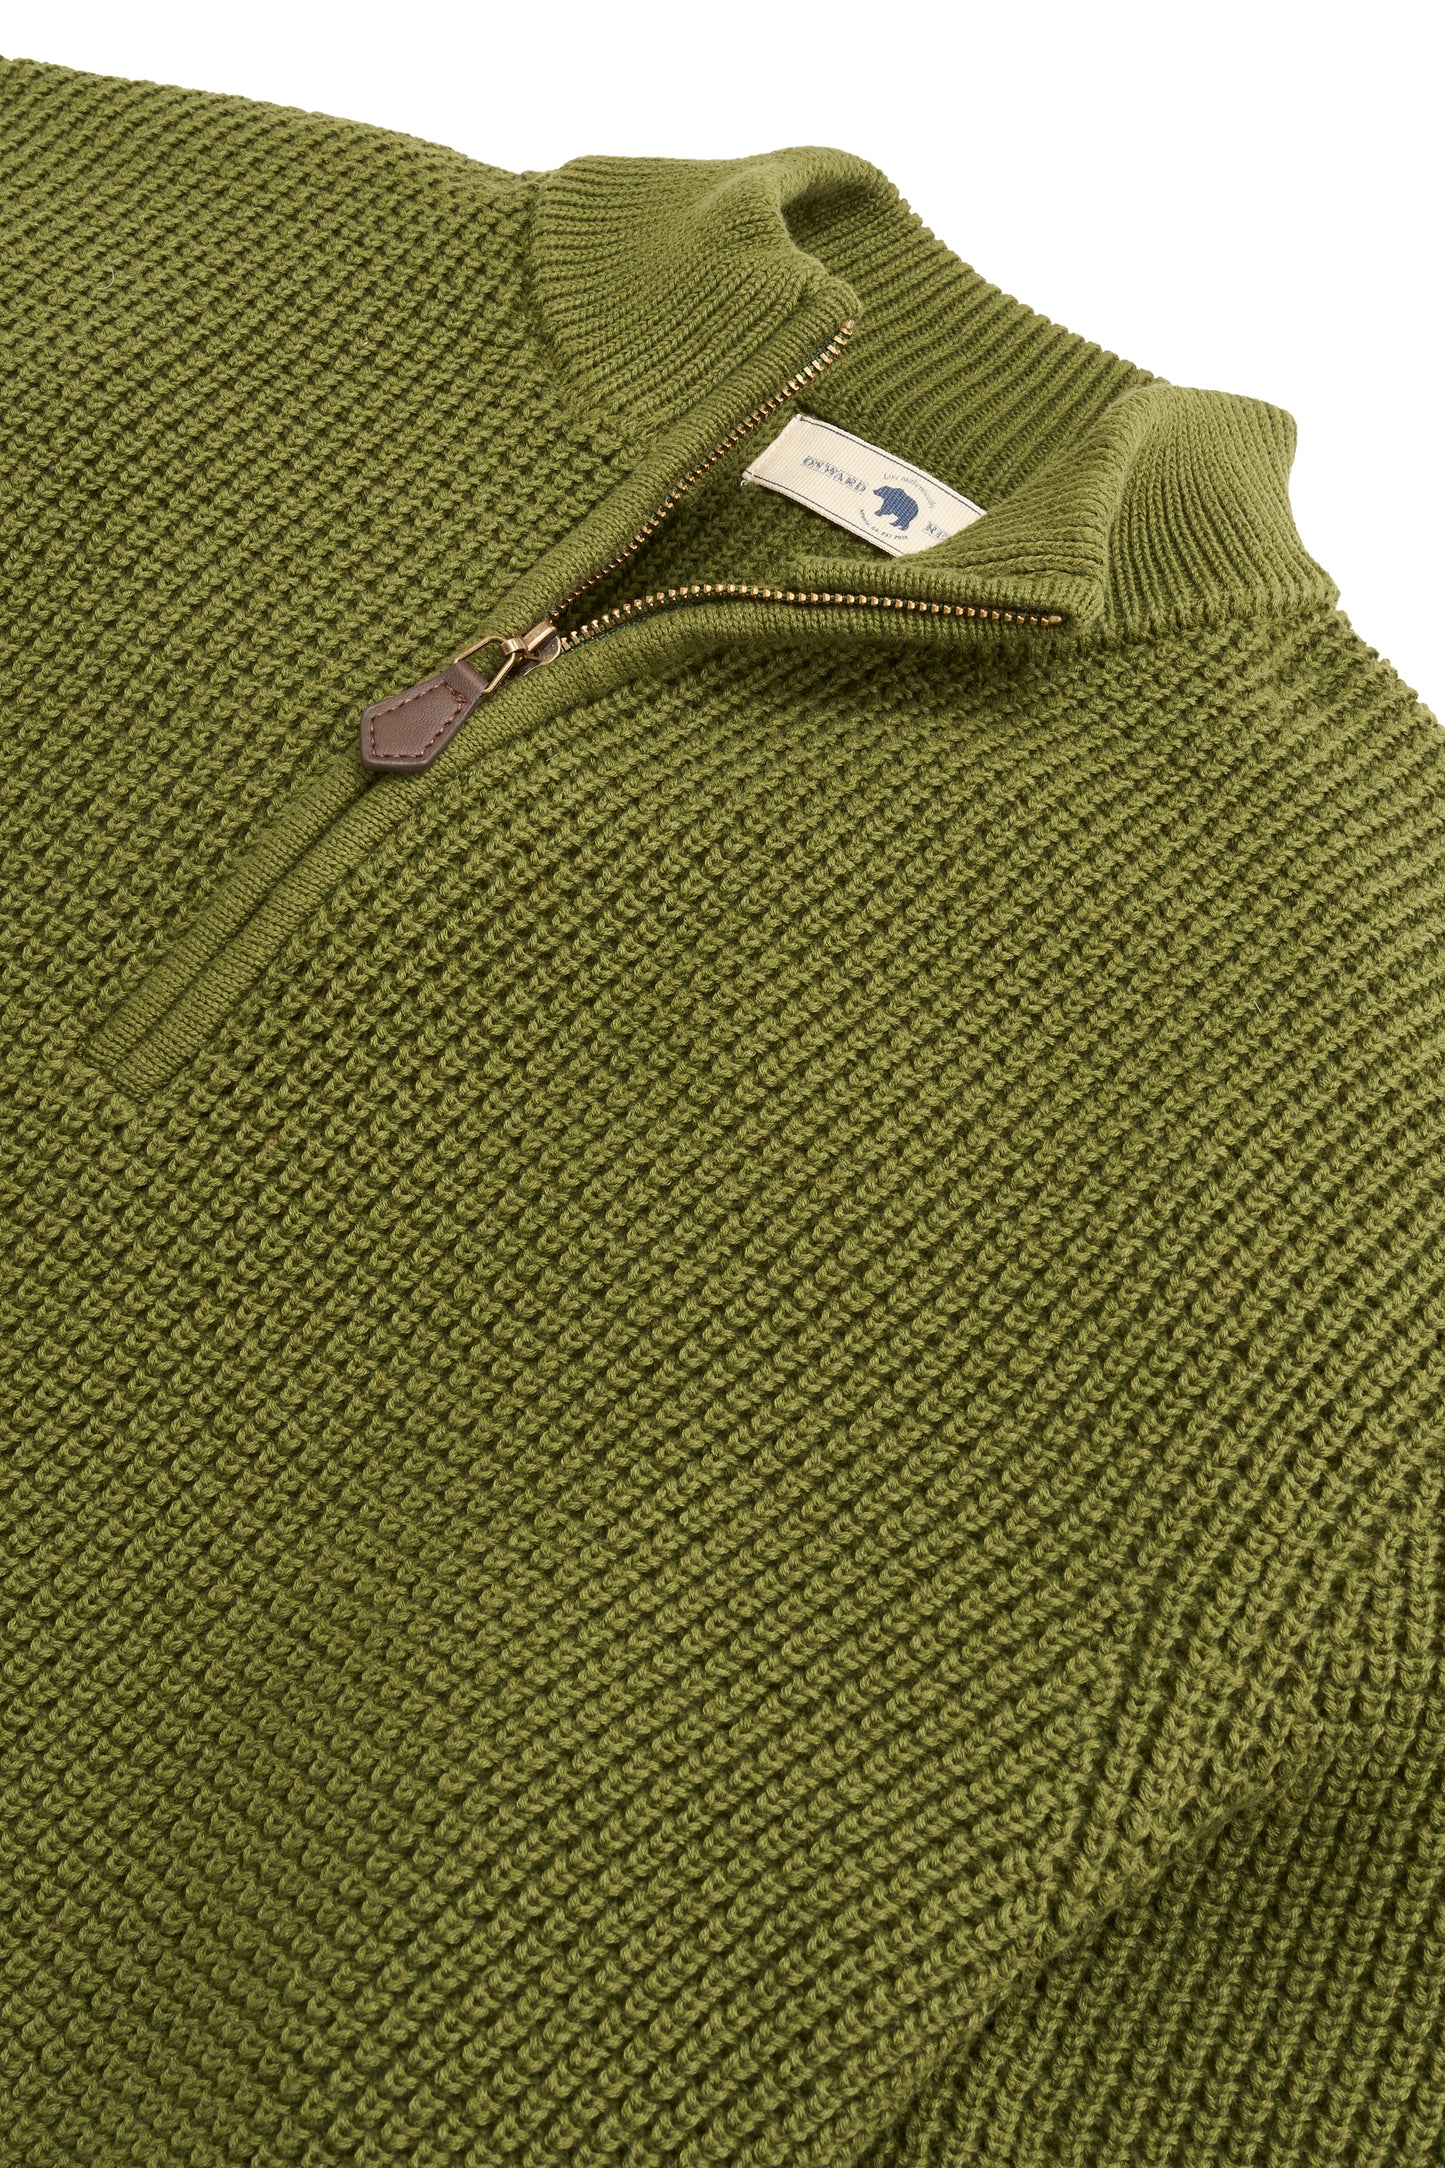 Angler Sweater